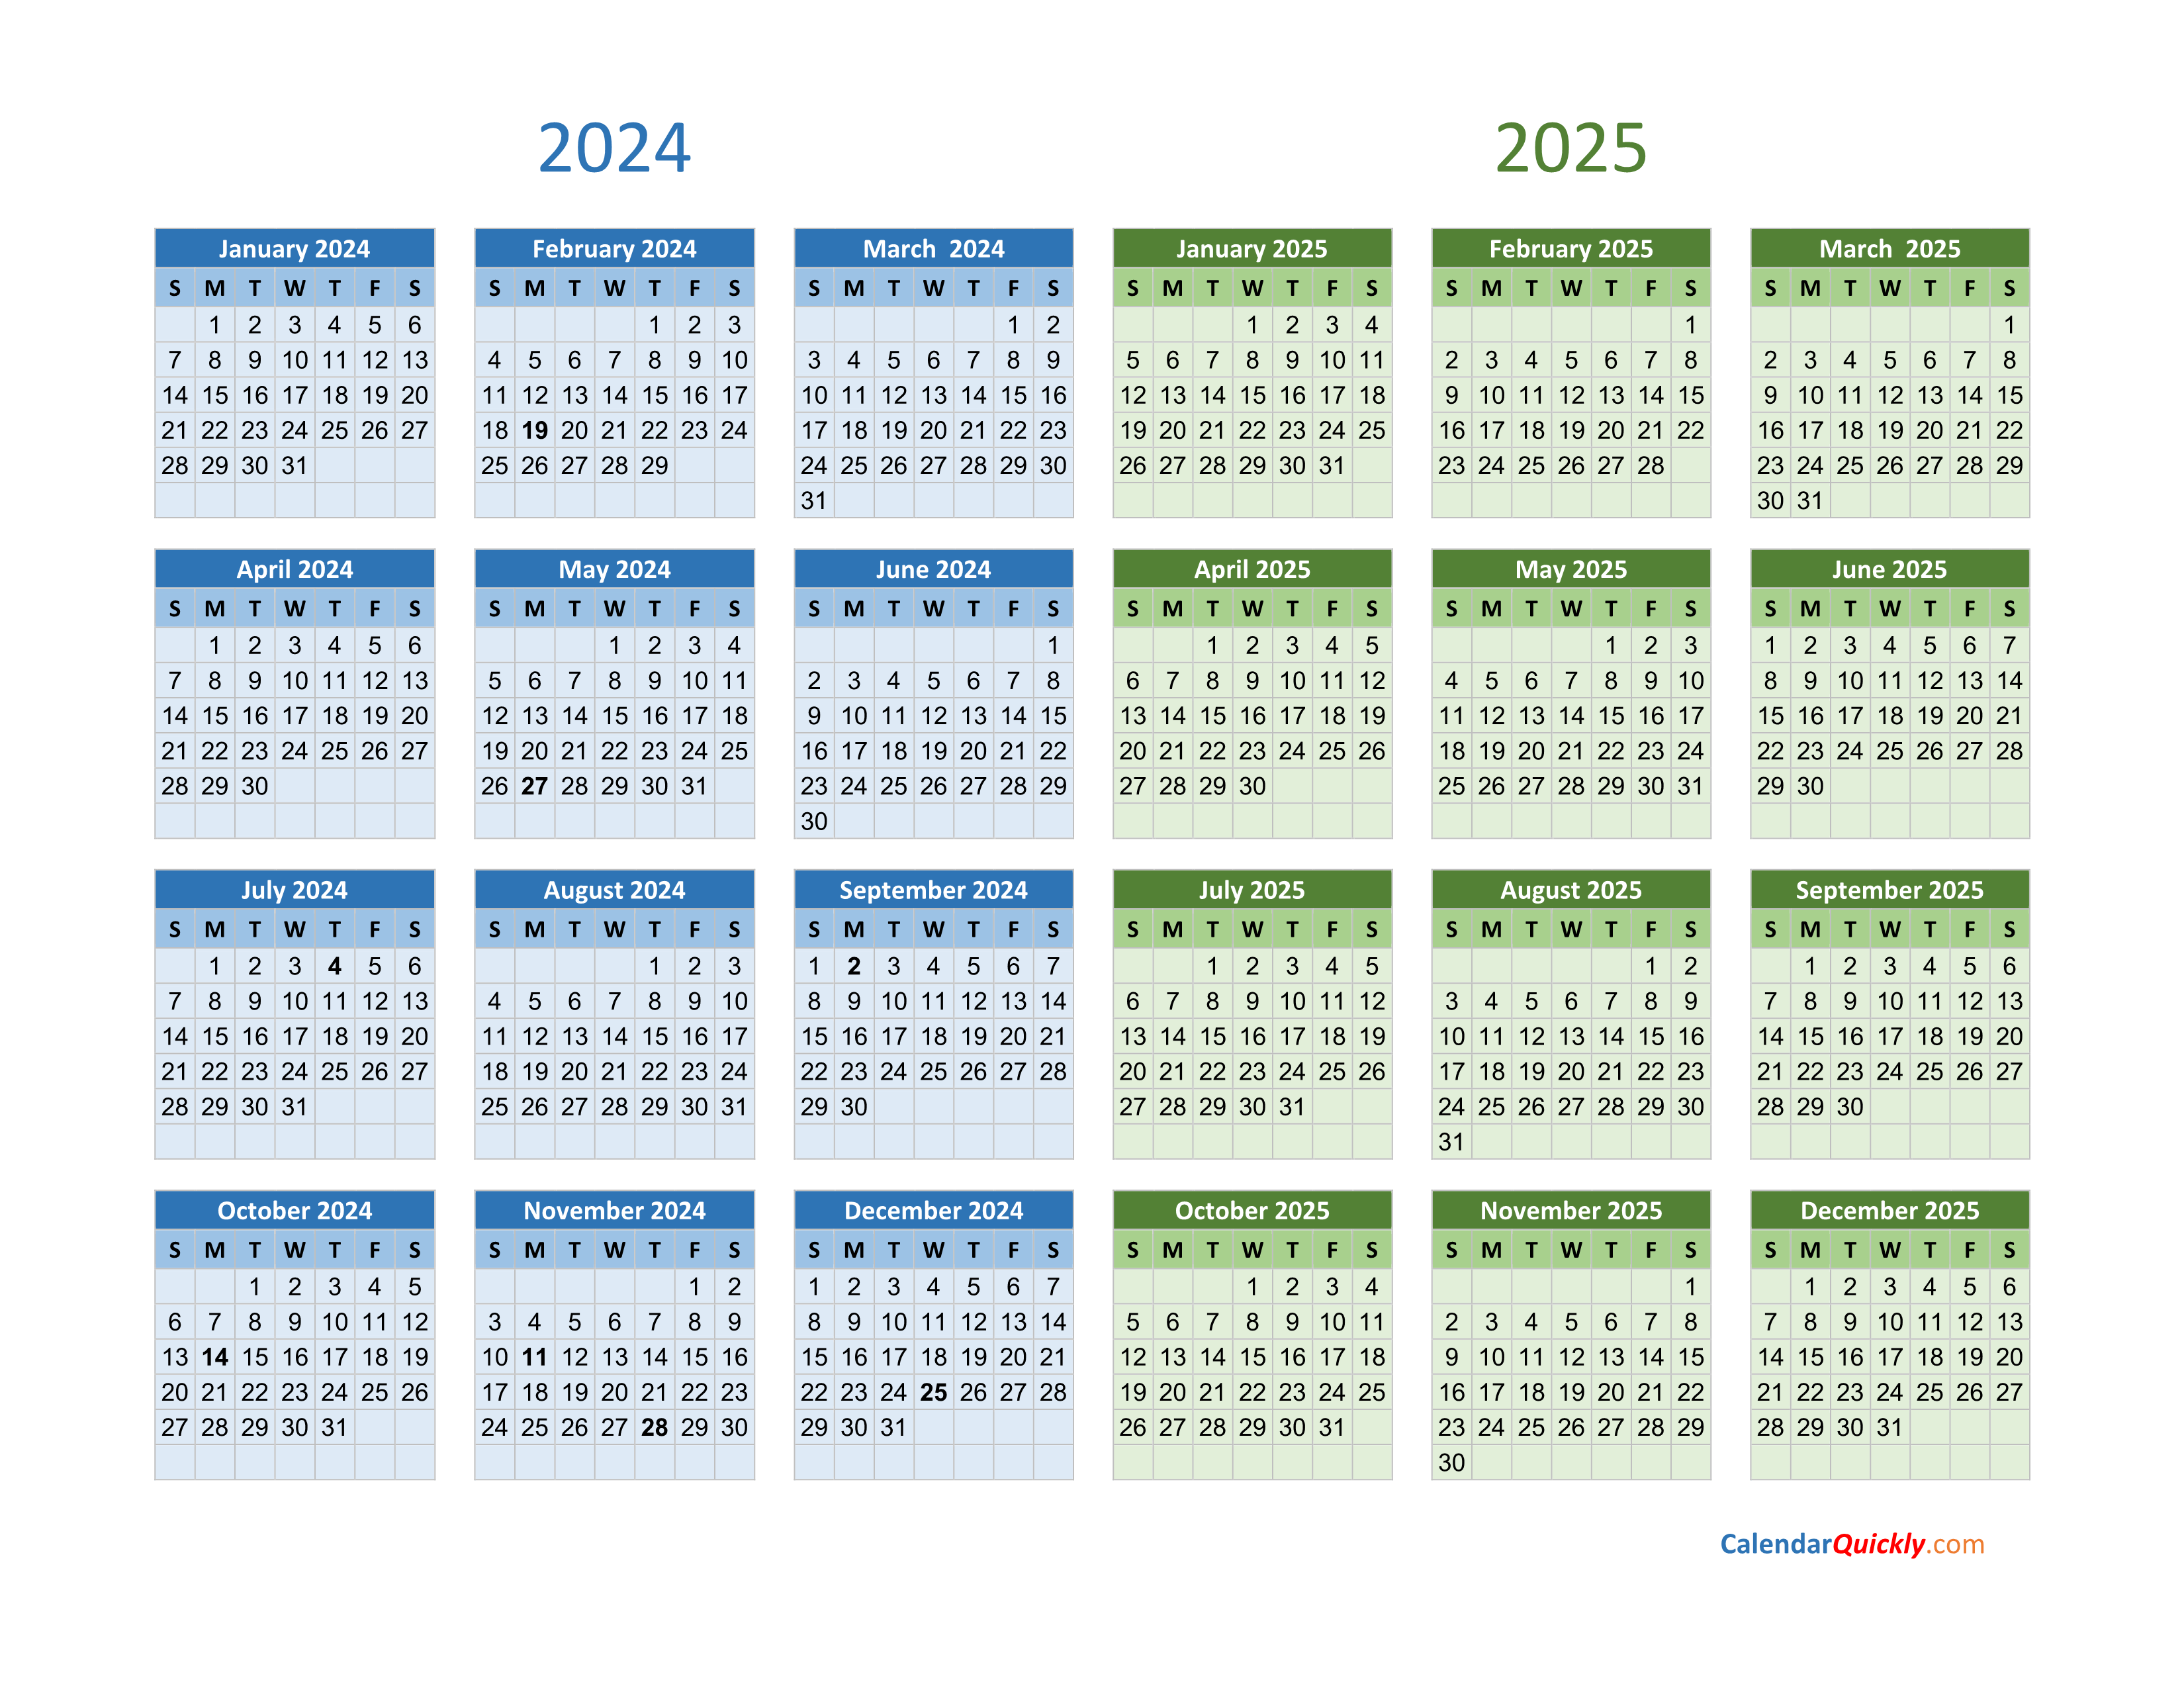 2024 and 2025 Calendar | Calendar Quickly